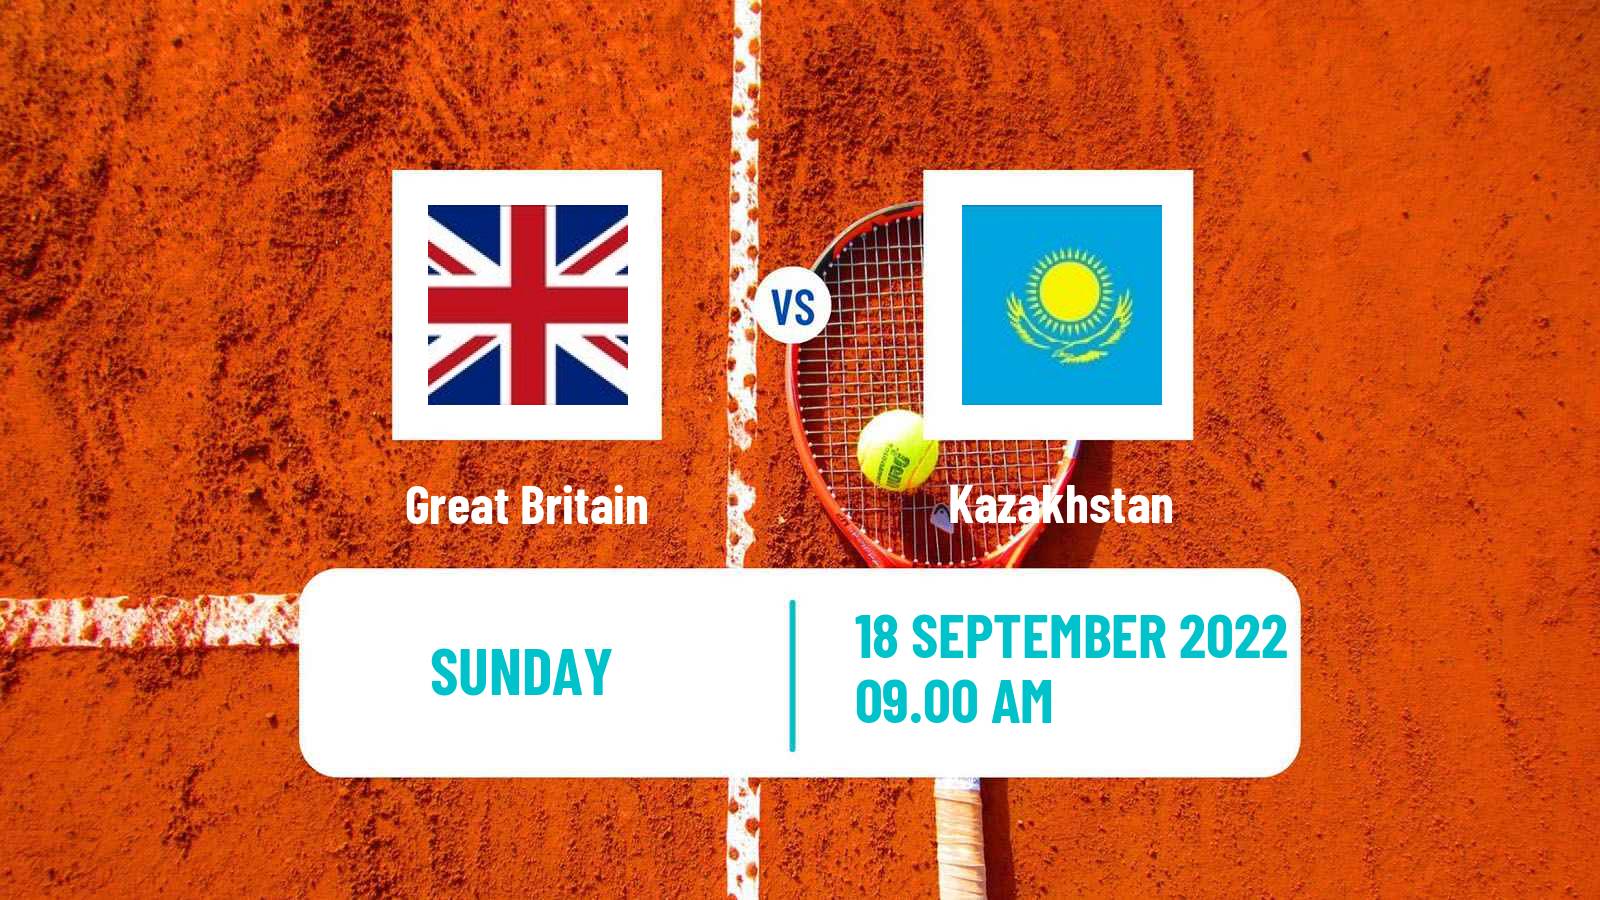 Tennis Davis Cup - World Group Teams Great Britain - Kazakhstan